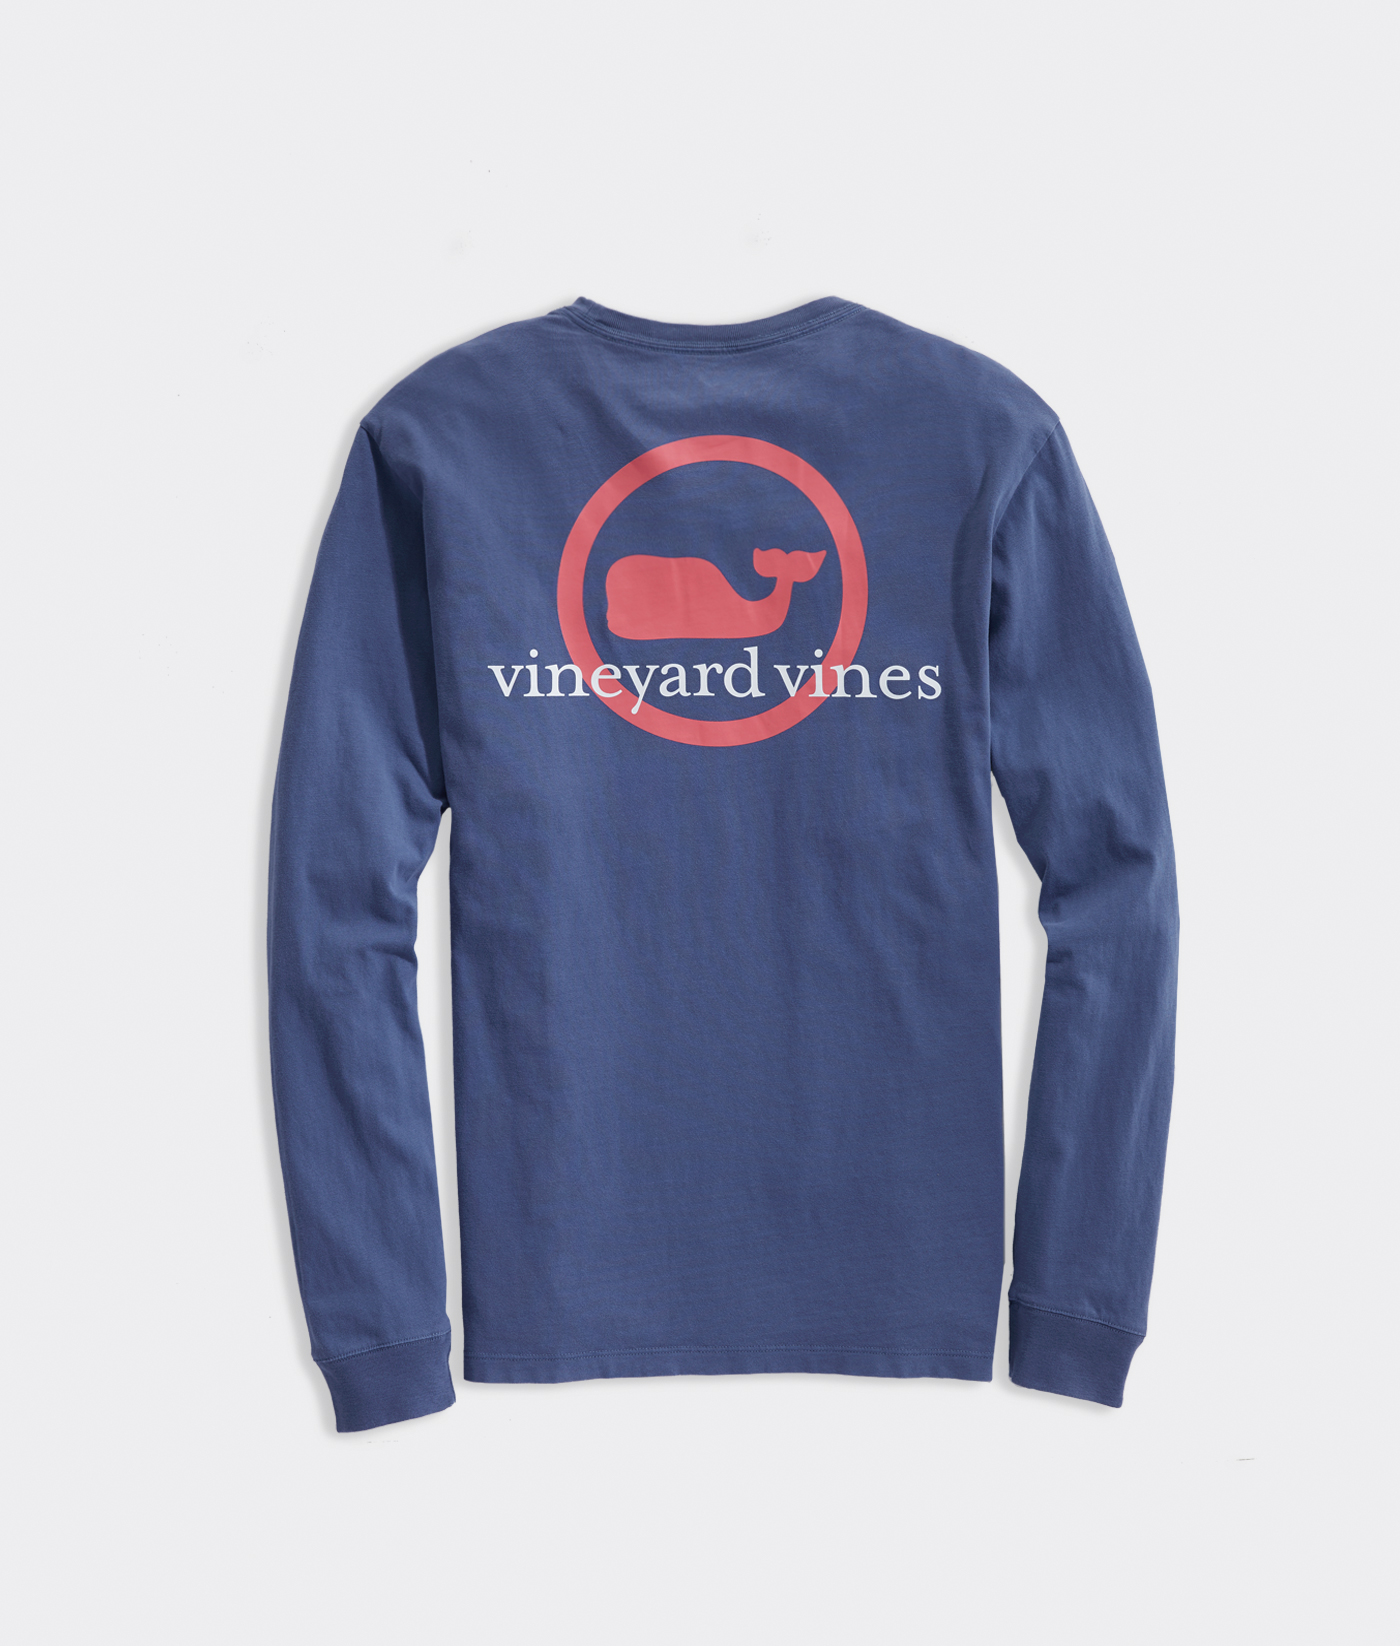 Shop Garment Dyed Whale Dot Long-Sleeve Pocket Tee at vineyard vines